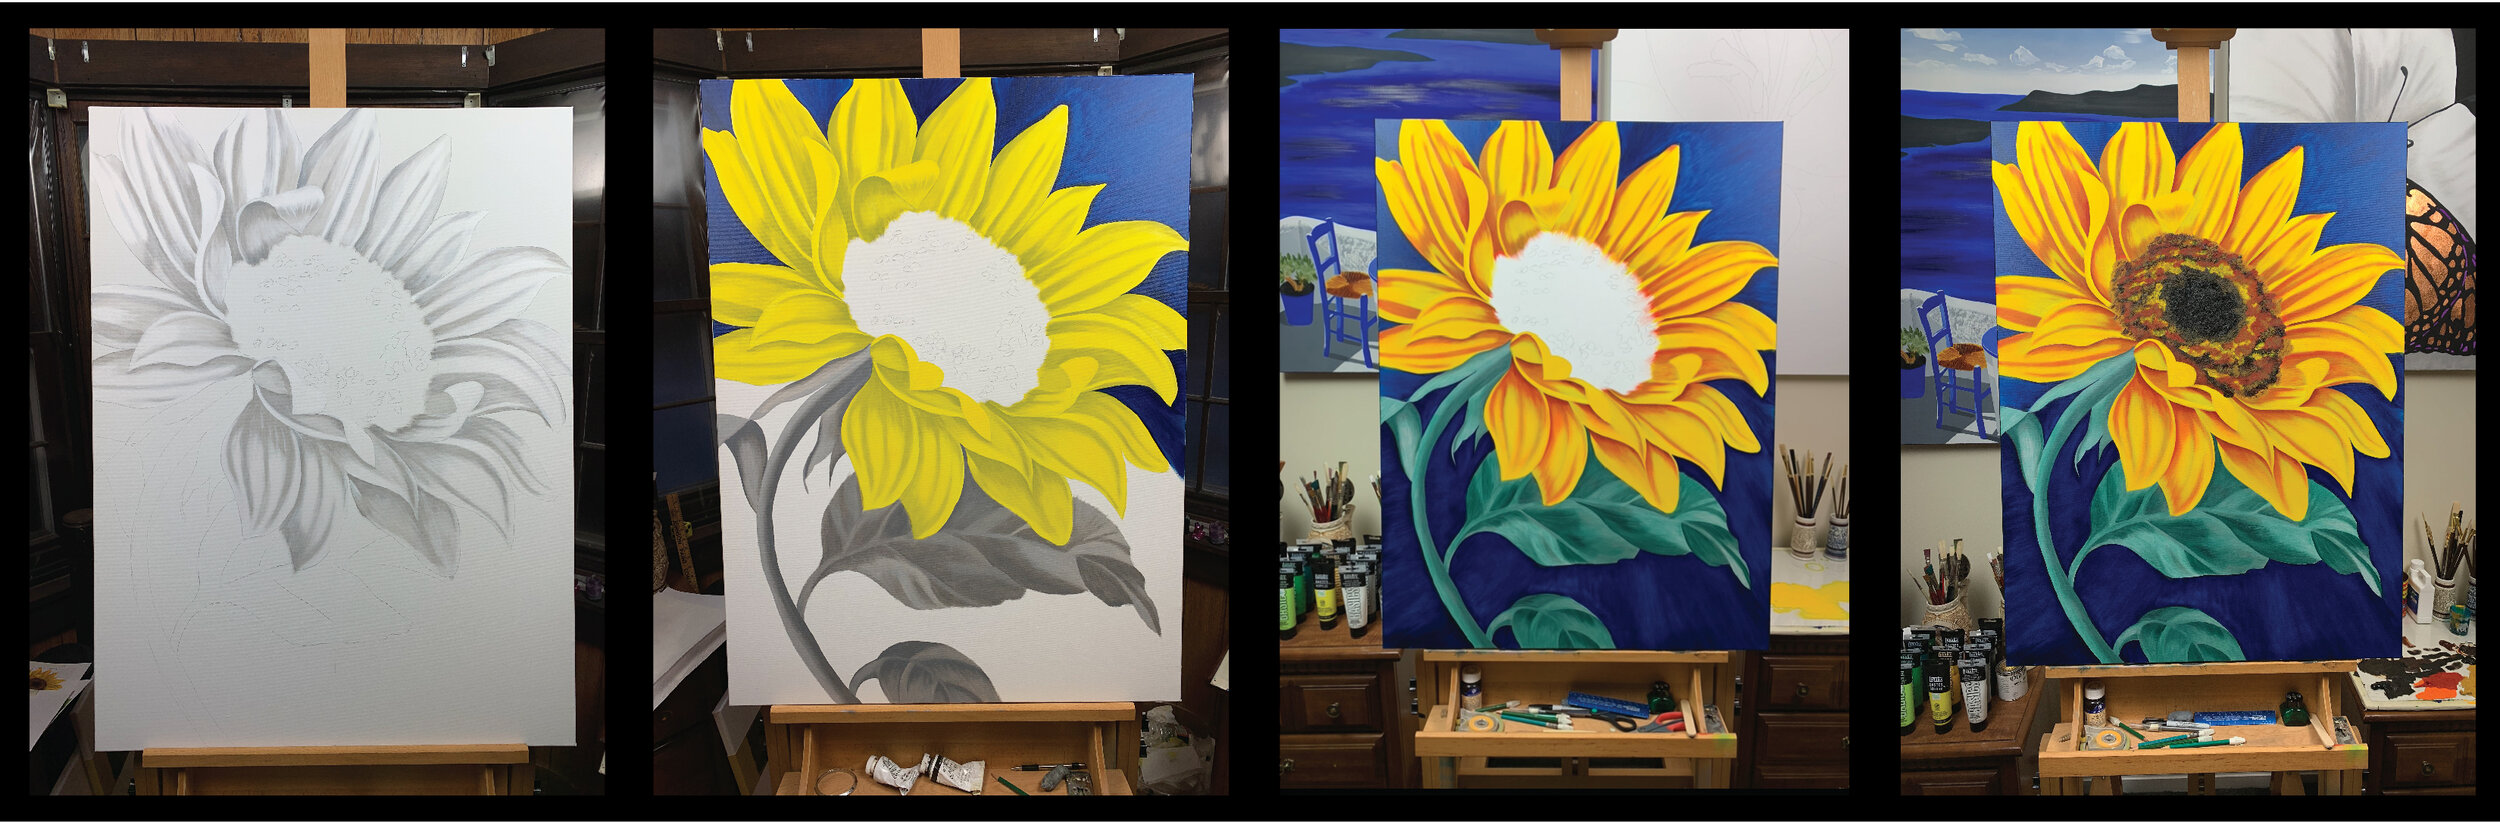 Sunflower Progression Pic-01.jpg